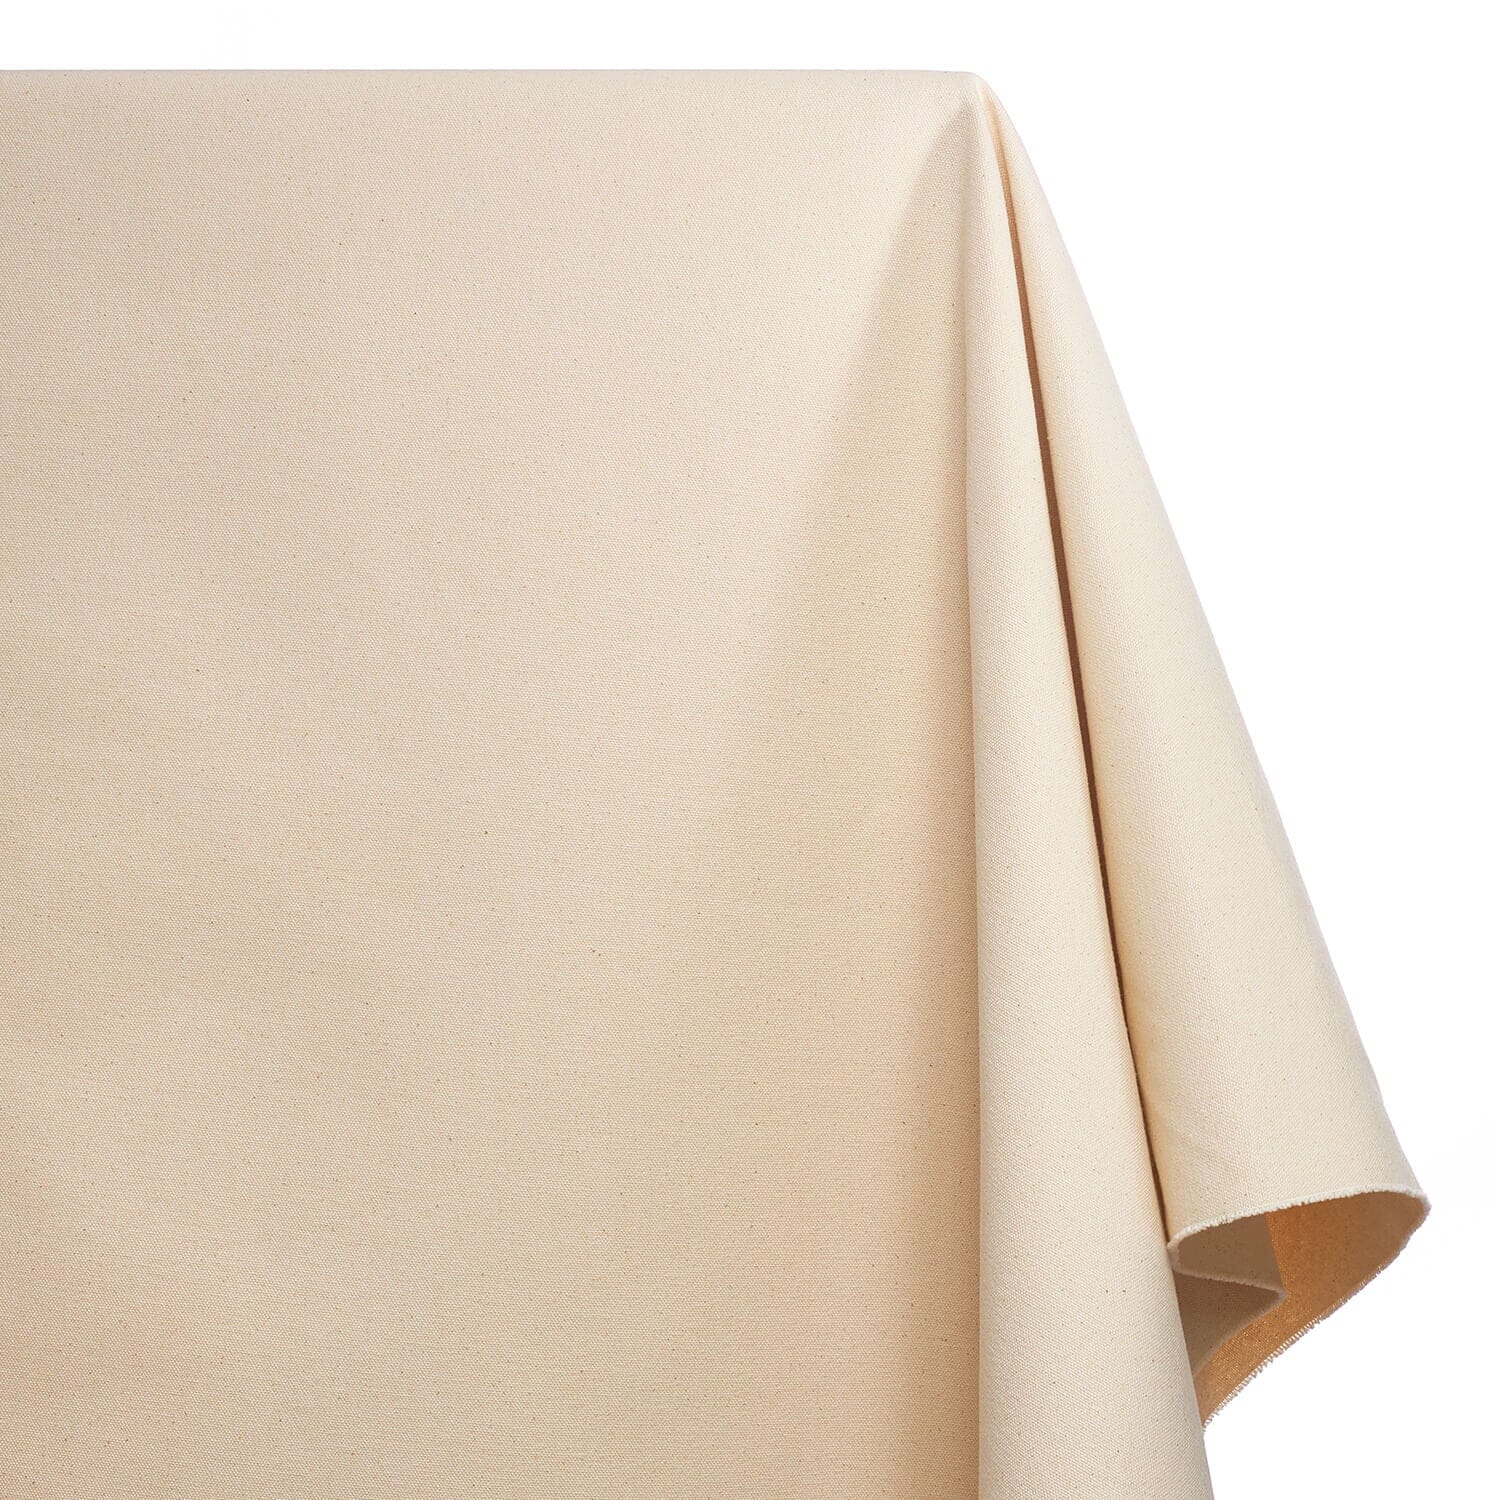 Black Canvas Fabric, #8 Duck Cloth, 58 Width, Wholesale